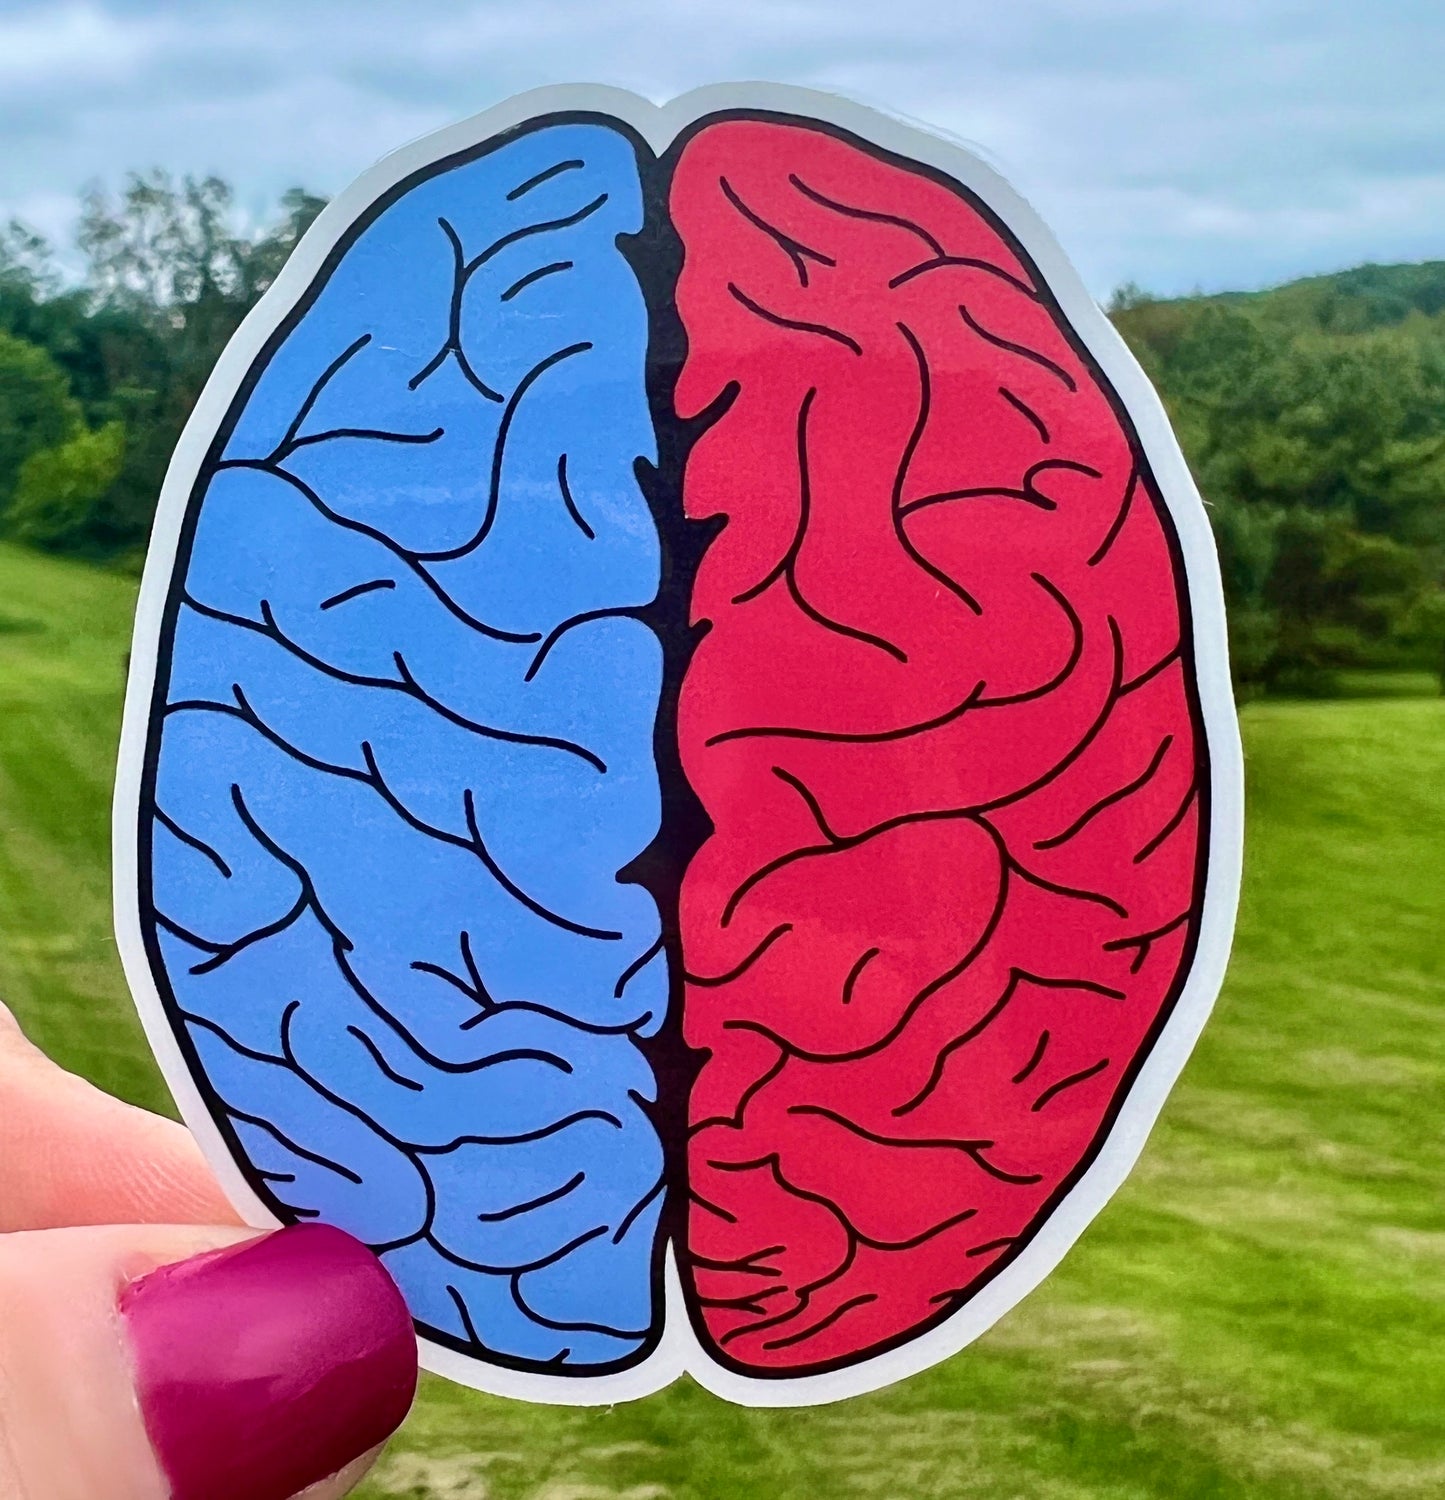 Colored cerebral hemispheres sticker